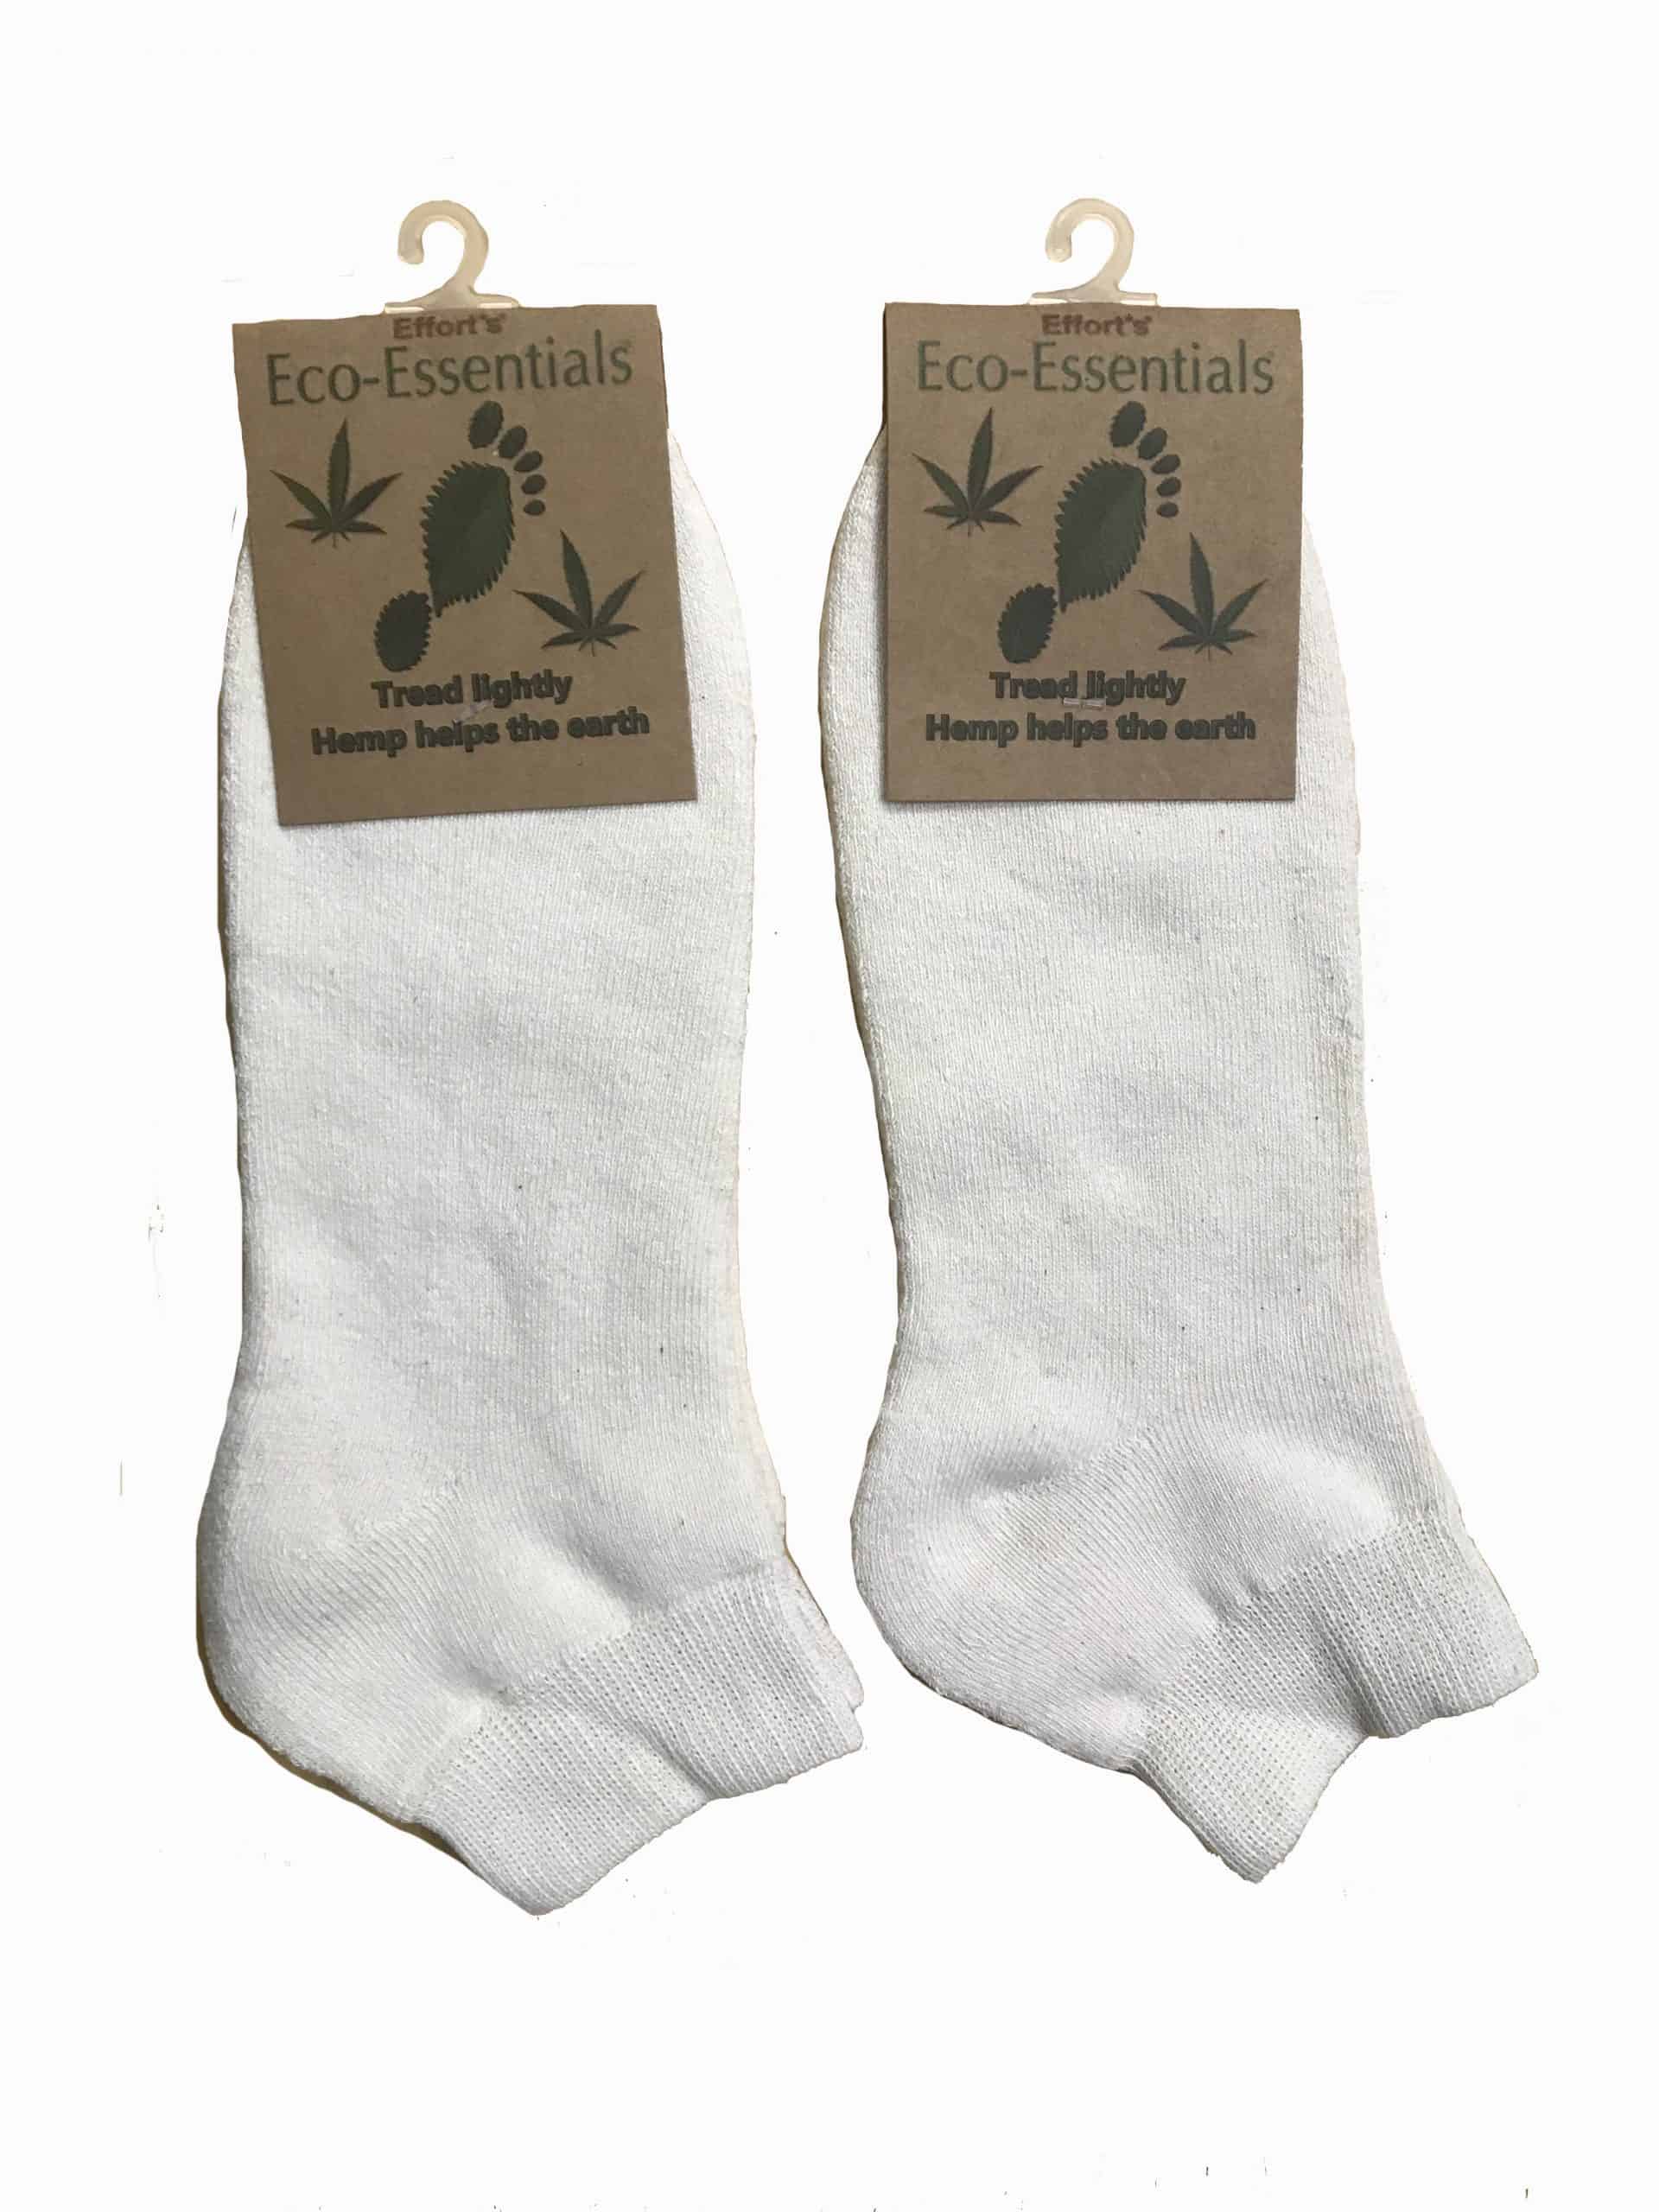 Men's Hemp Ankle Socks Set of 3 pairs